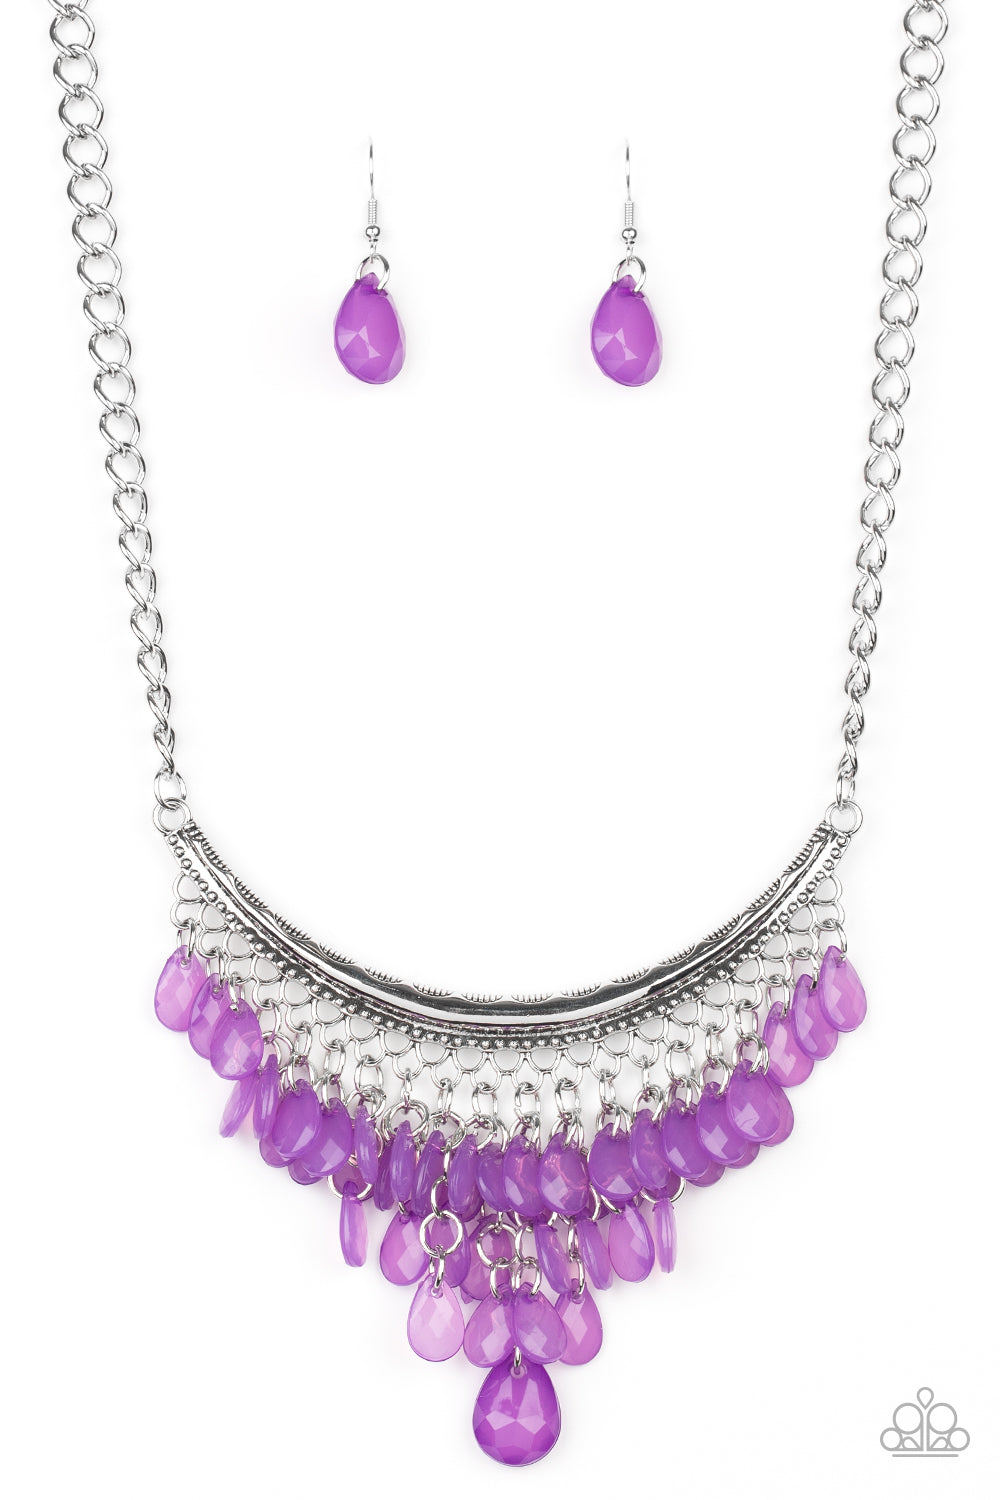 Bead Necklace - Paparazzi Rio Rainfall - Purple Teardrop Necklace Paparazzi jewelry image